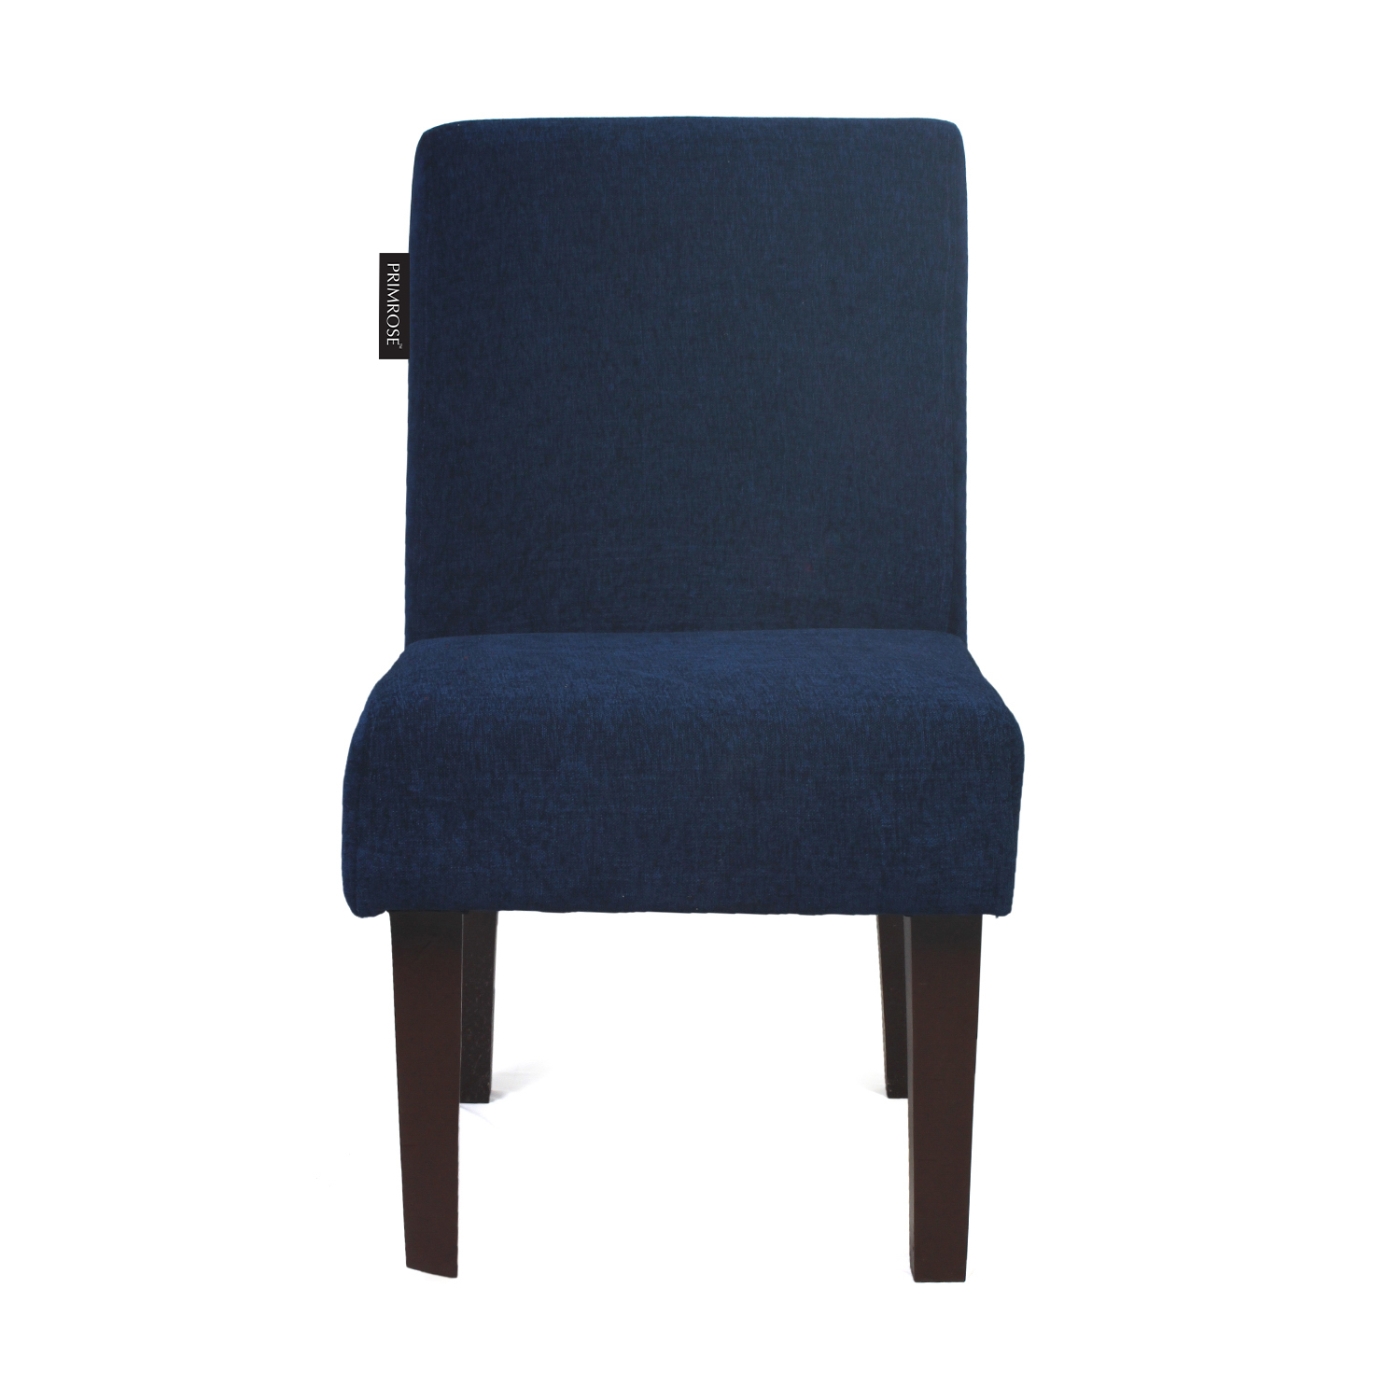 PRIMROSE Betty Molfino Fabric Combo Of 2 Chair And 1 Ottoman - Blue  